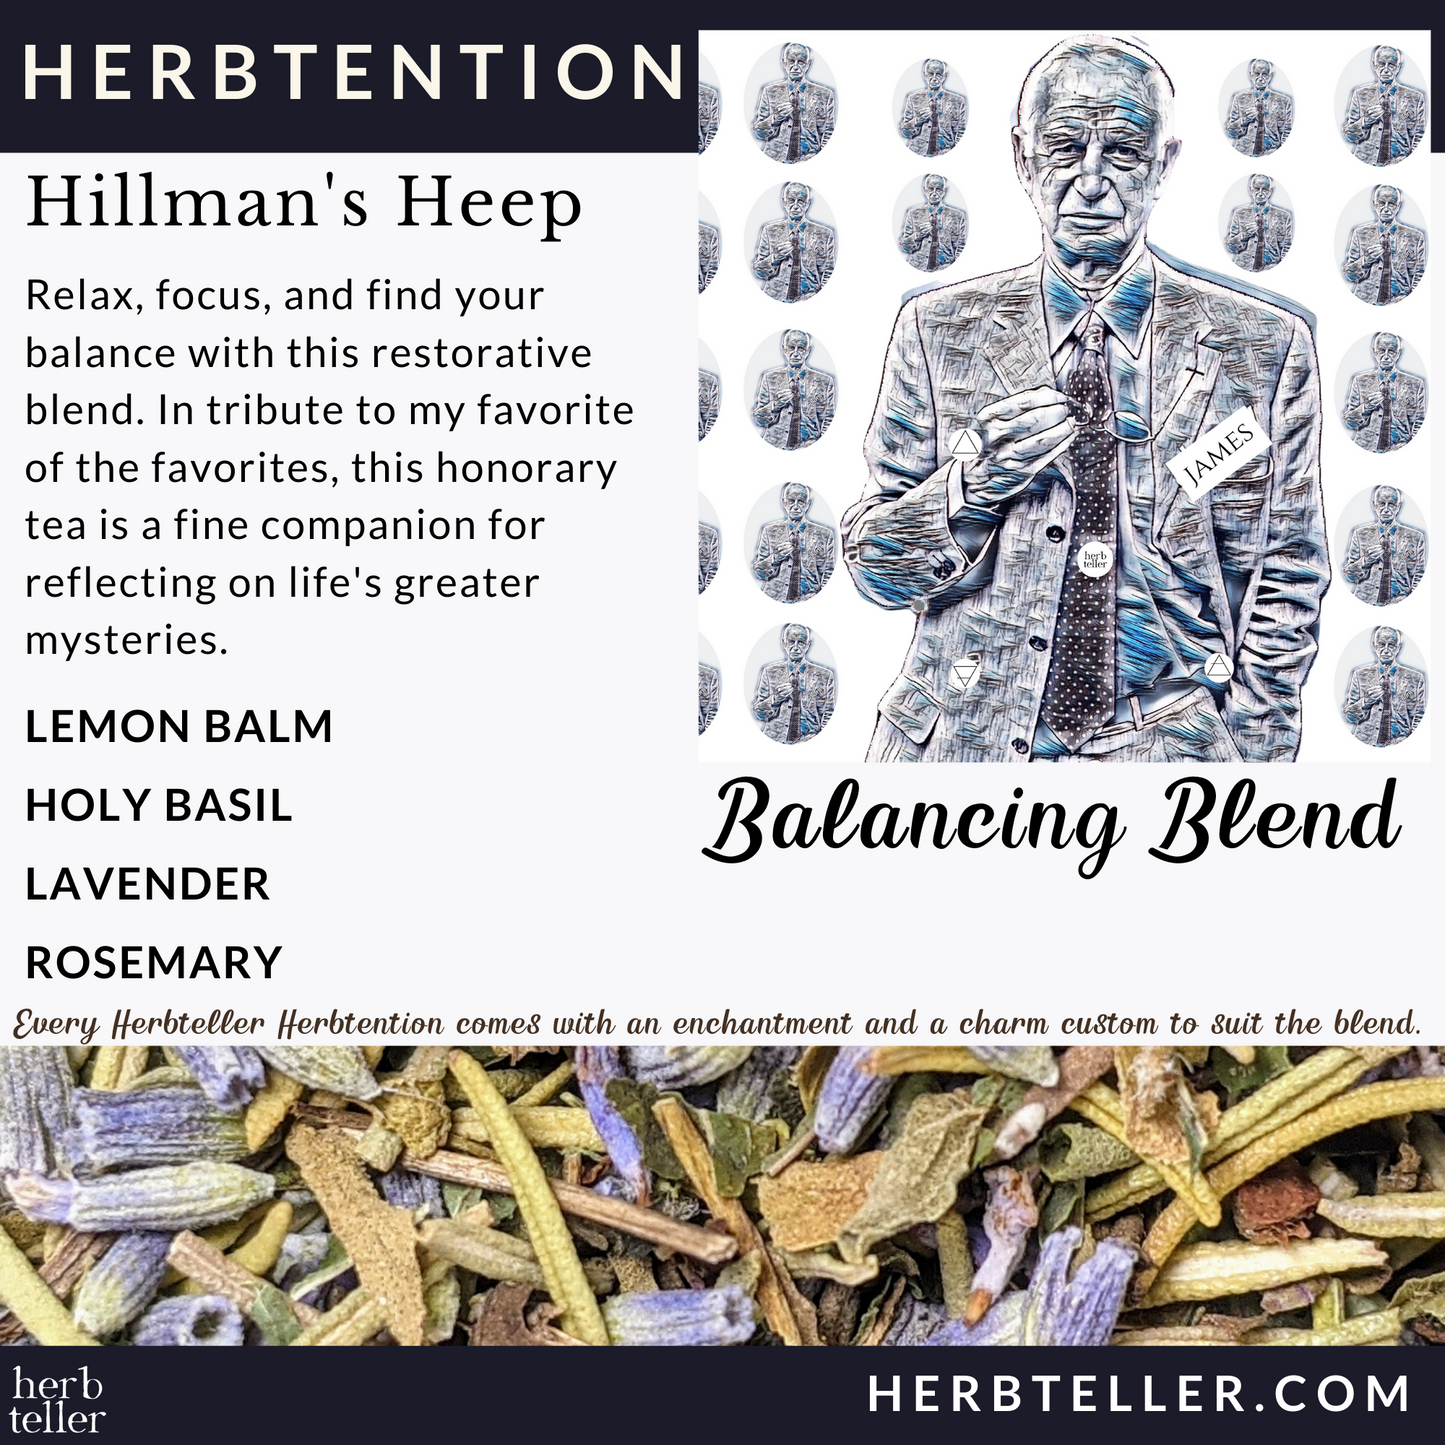 Hillman's Heep Herbal Tea/Infusion